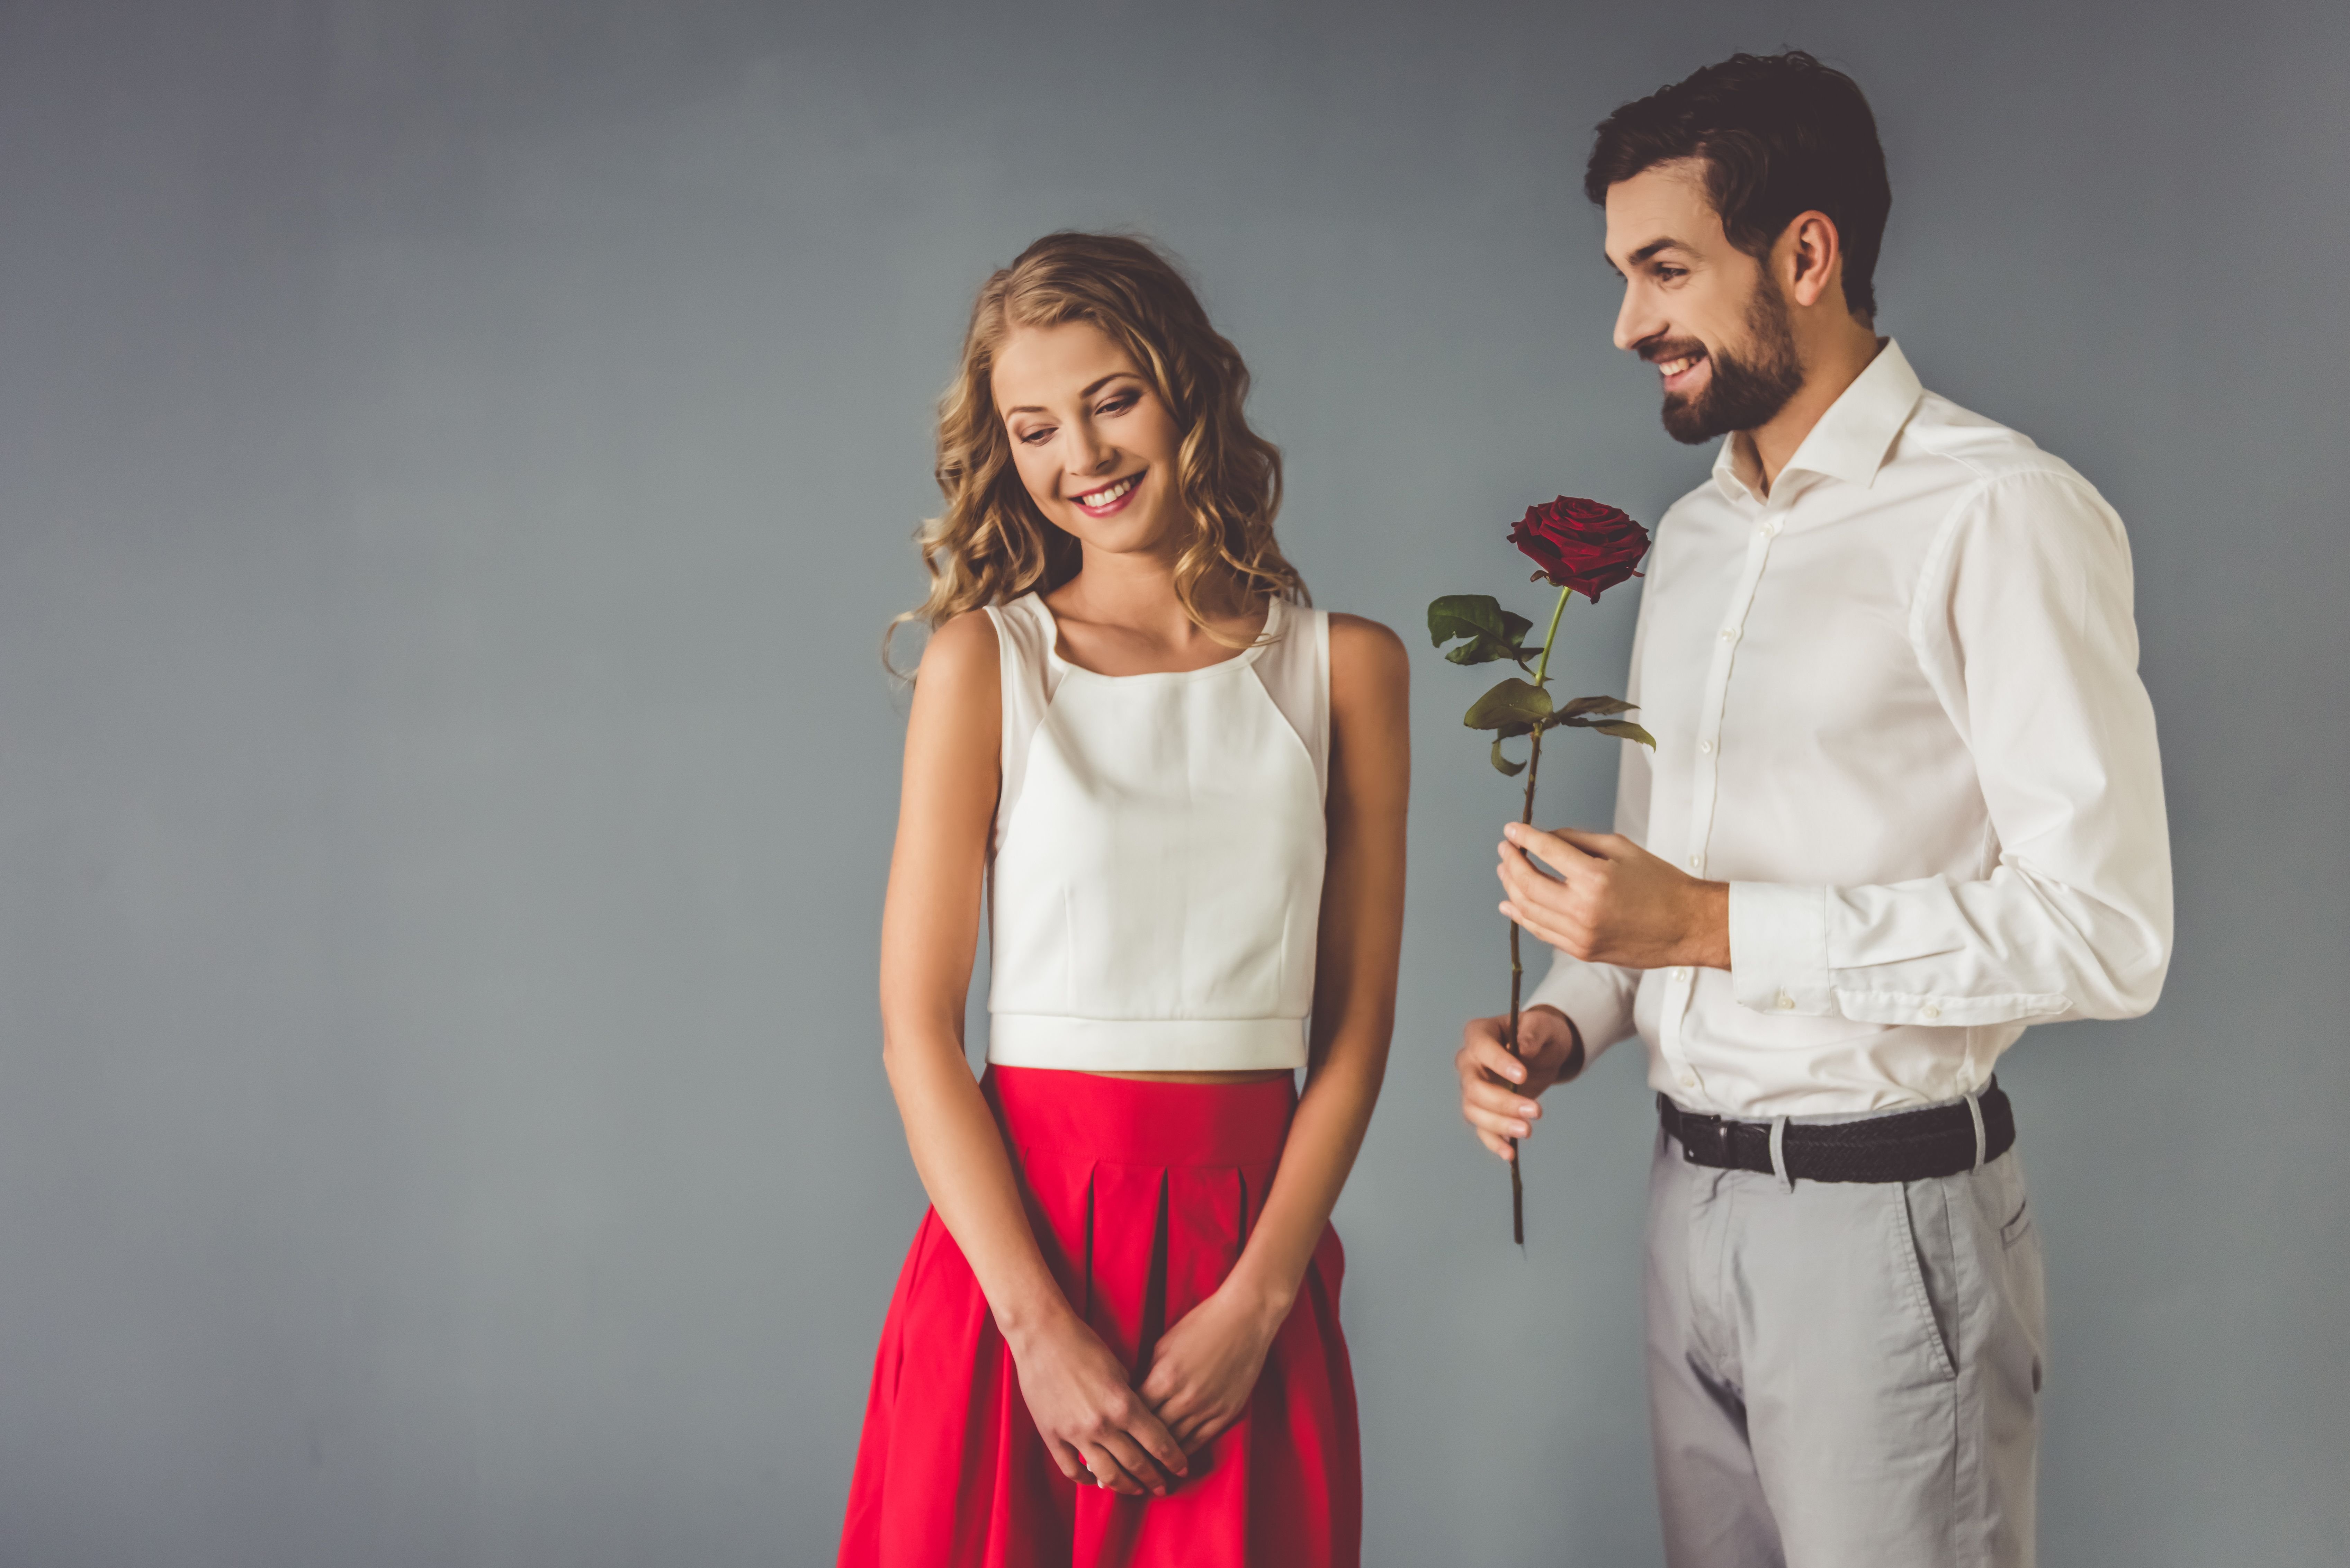 Hombre dándole una rosa roja a una mujer. | Foto: Shutterstock 